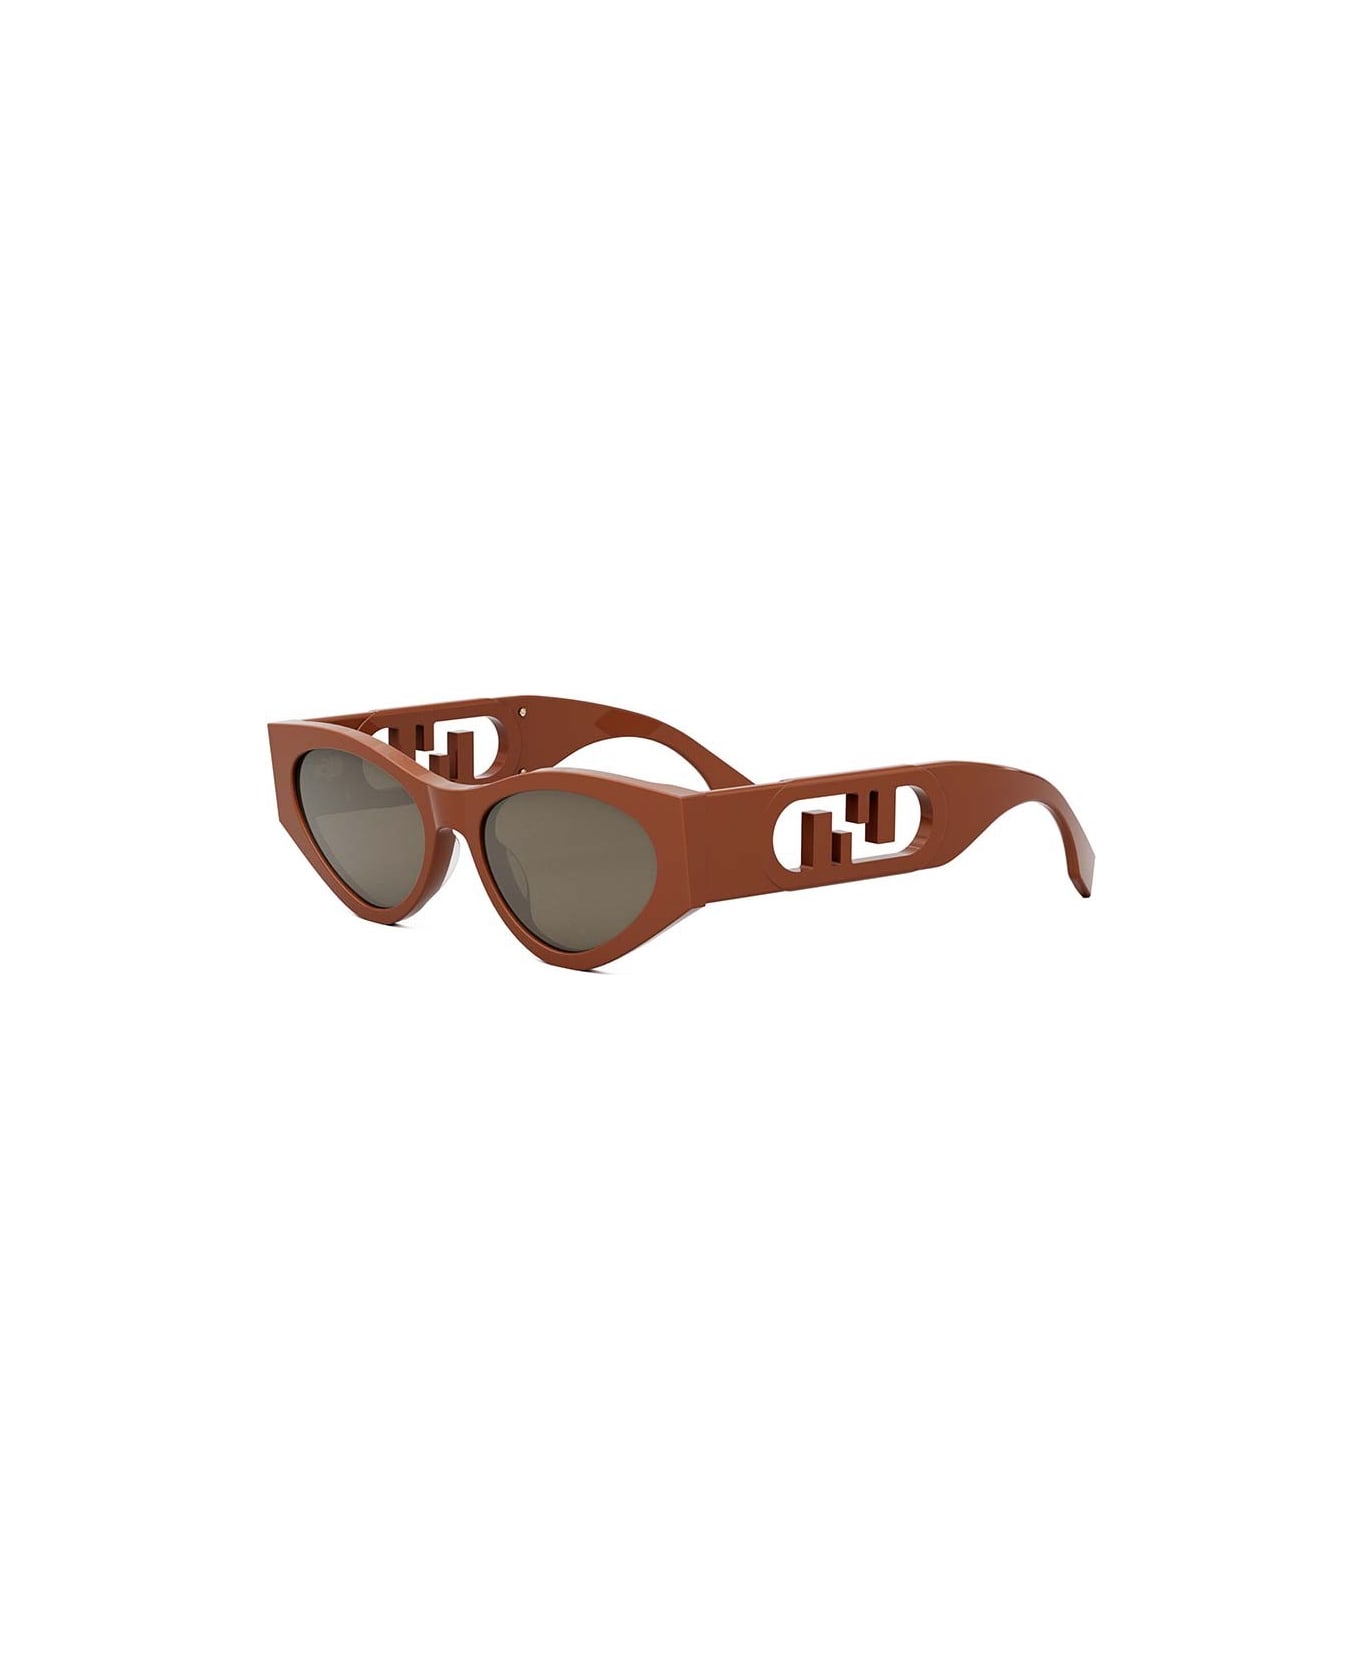 Fendi Eyewear Sunglasses - Arancione/Marrone